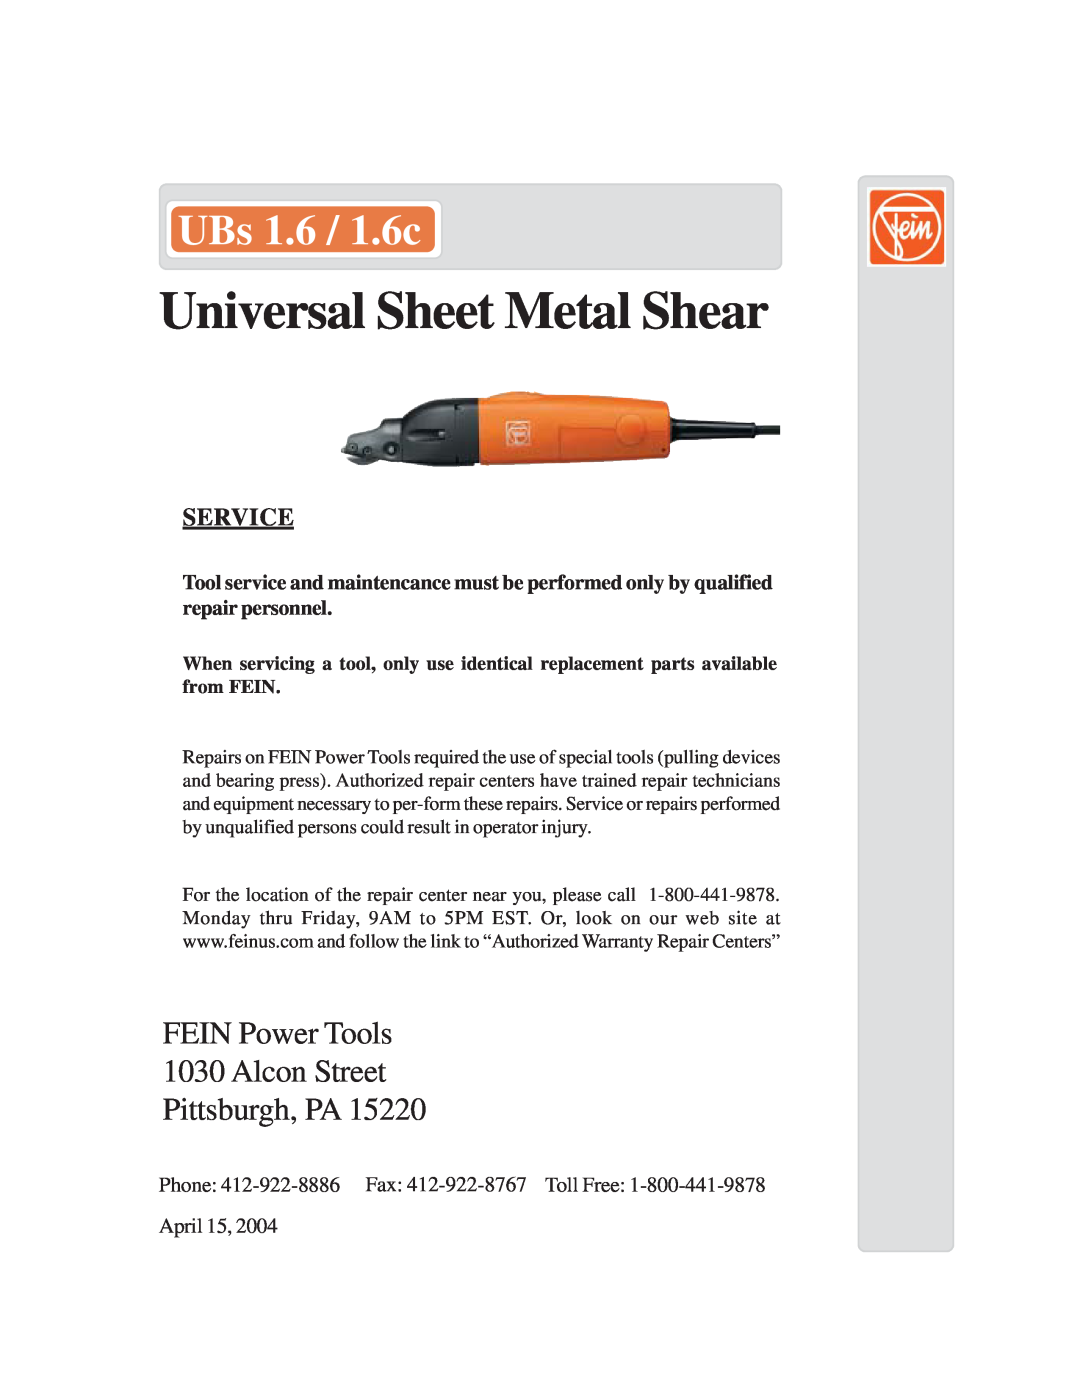 FEIN Power Tools UBs 1.6 / 1.6c warranty Universal Sheet Metal Shear, FEIN Power Tools 1030 Alcon Street Pittsburgh, PA 